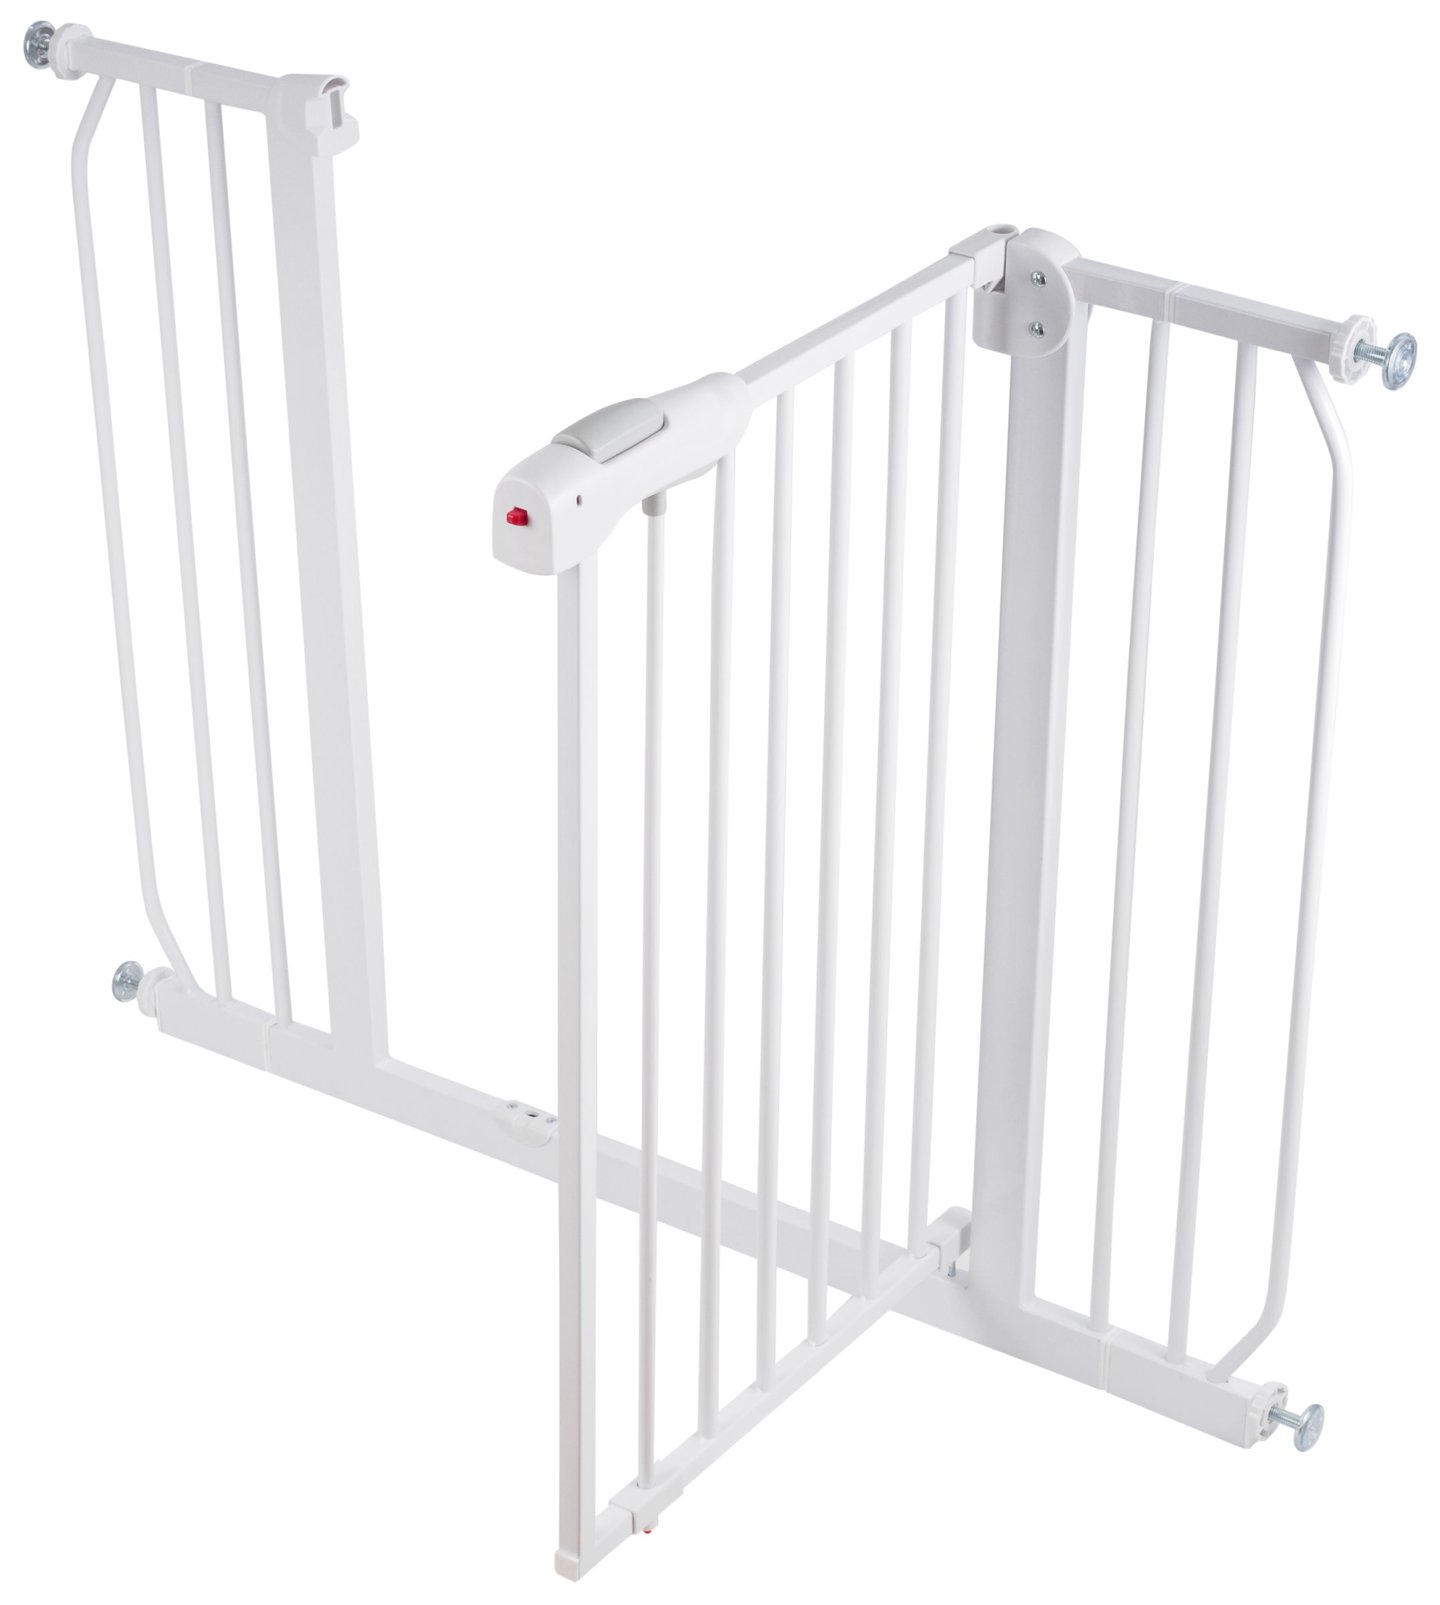 Pressure fit gate - safety railing - width: 76...105cm